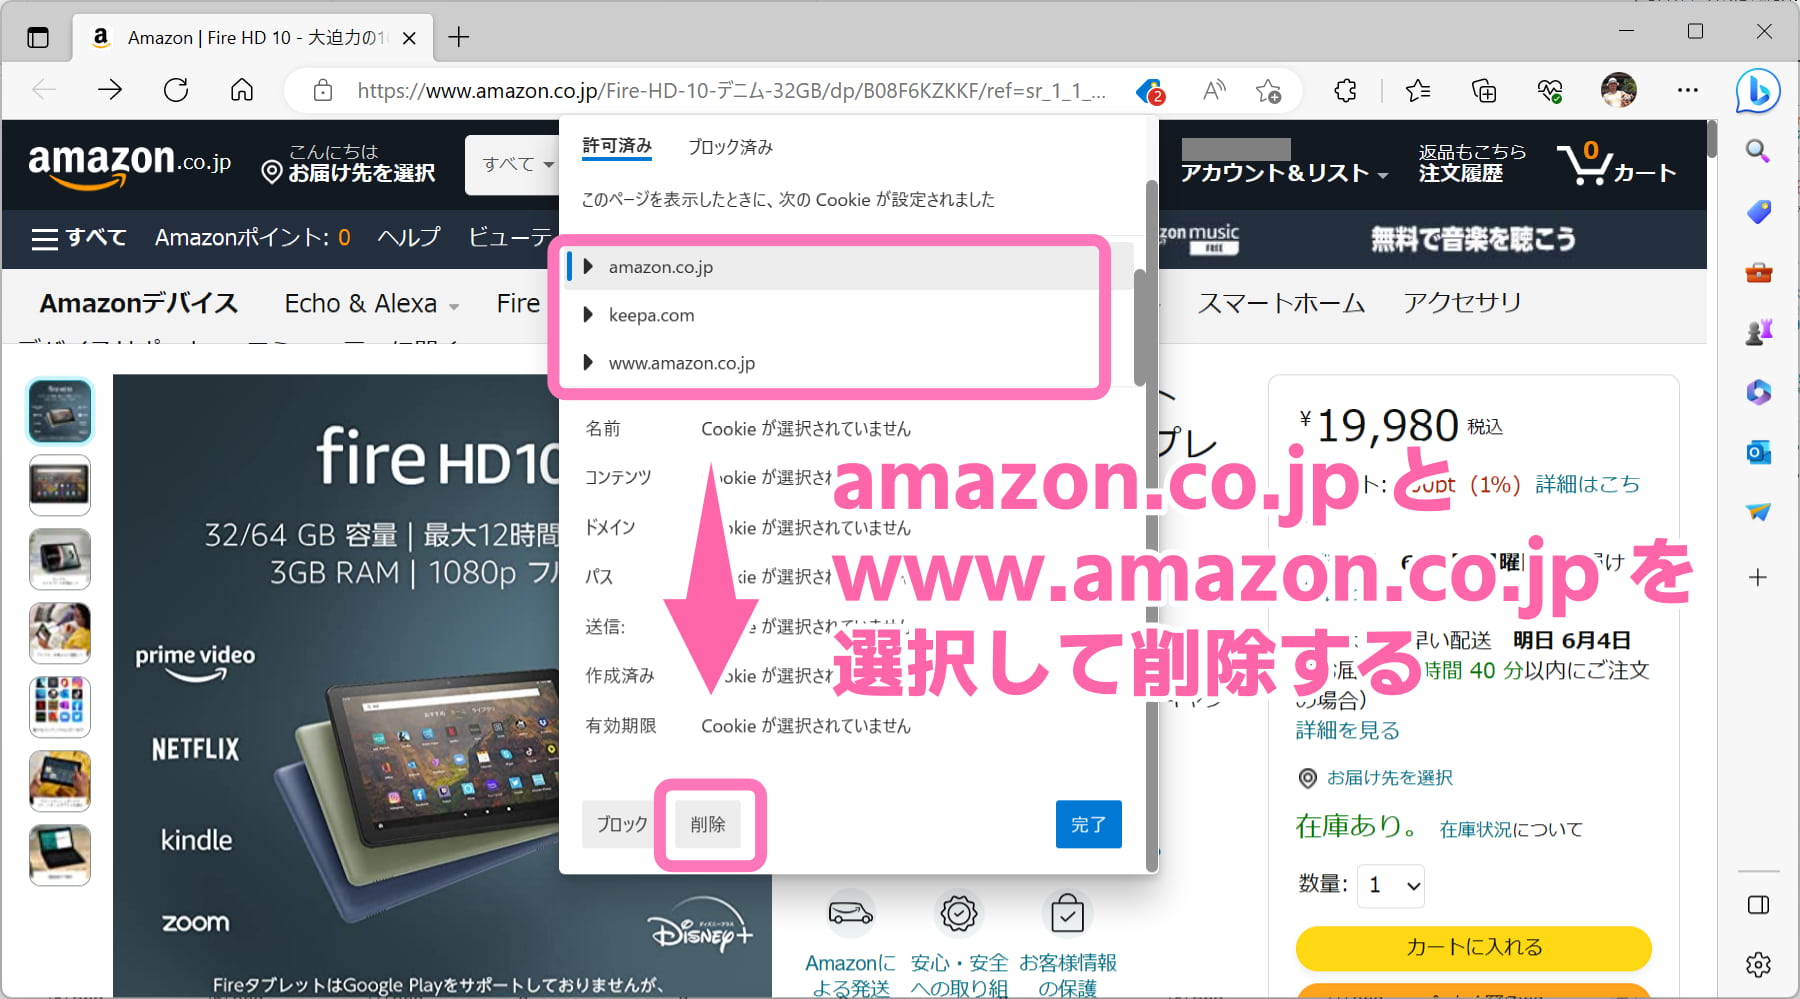 amazon.co.jpとwww.amazon.co.jpを選択して削除する